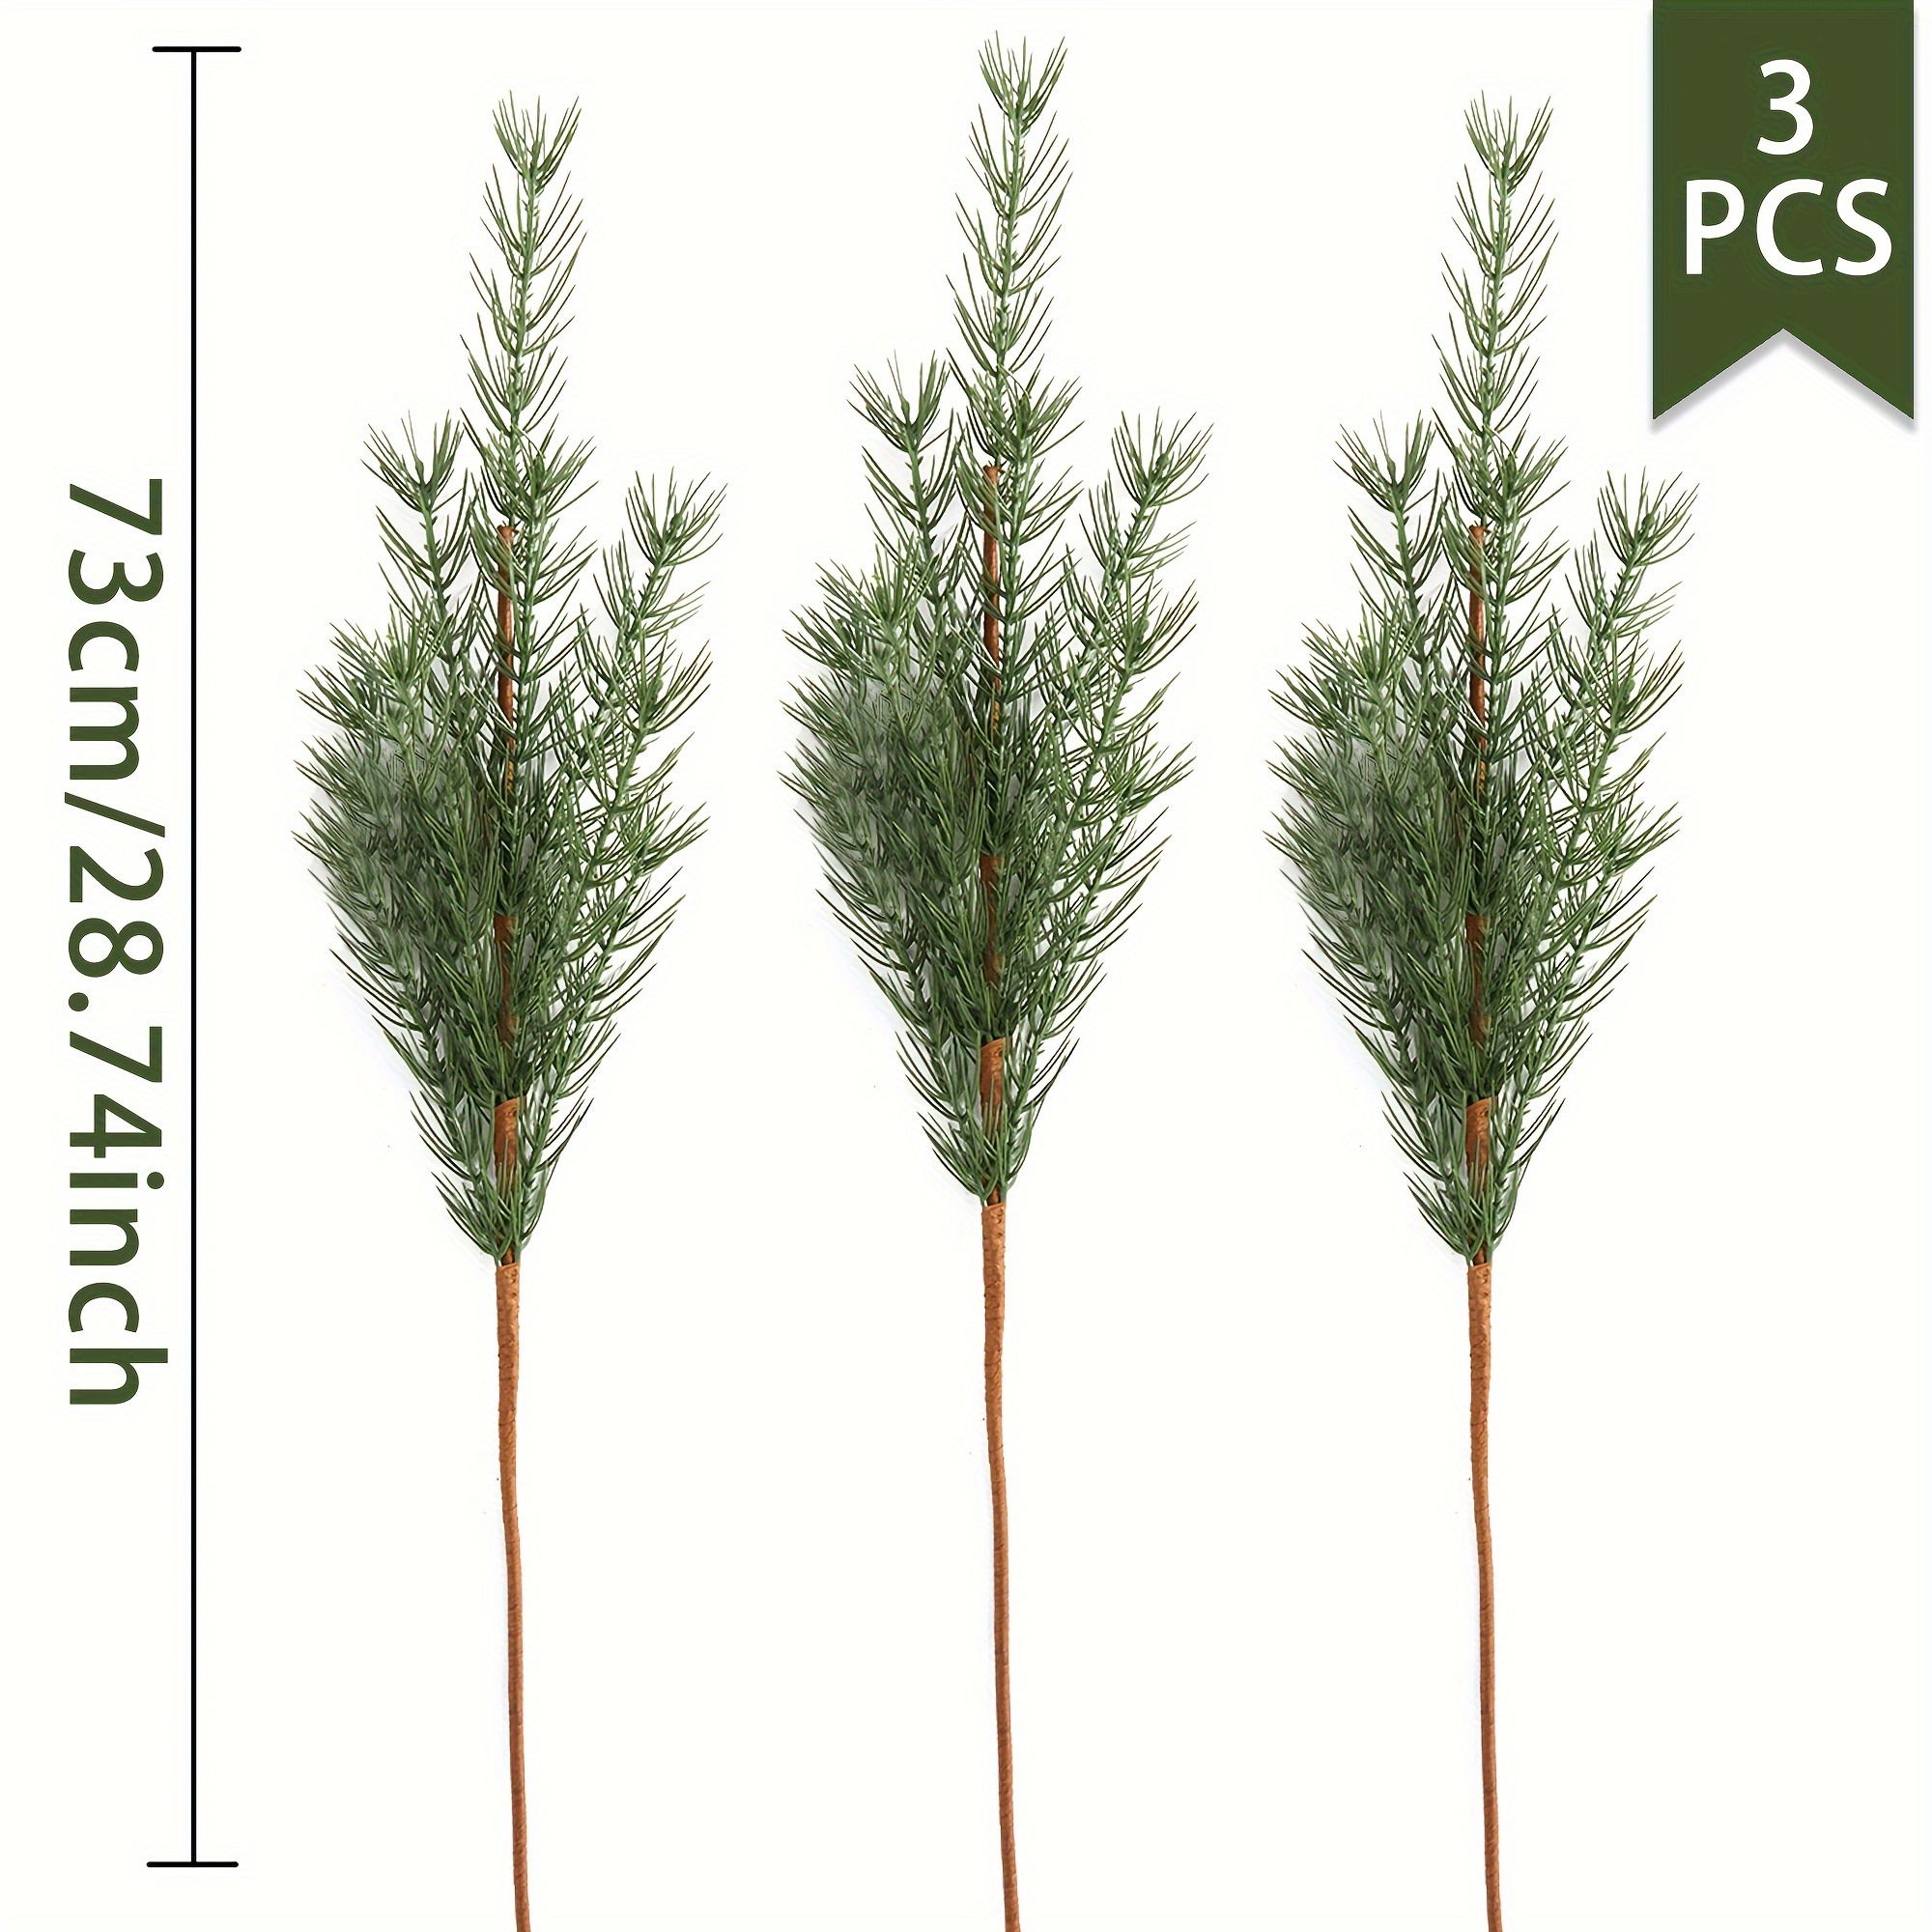 Artificial Christmas Green Pine Needles Branches Evergreen Picks